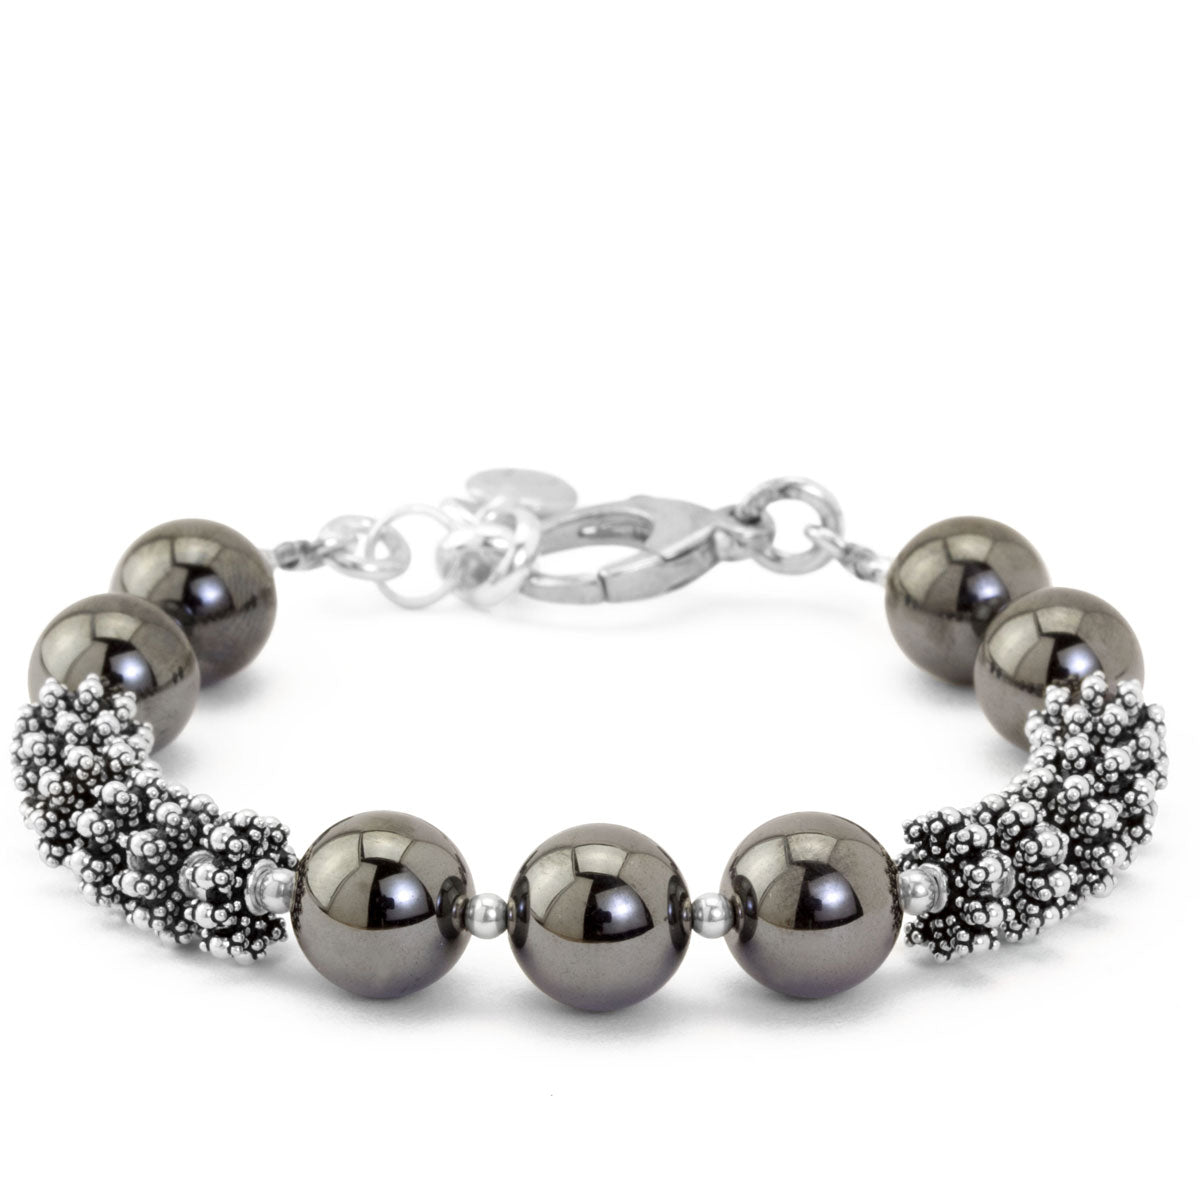 The Goddess Collection Textured Silver & Hematite Bracelet